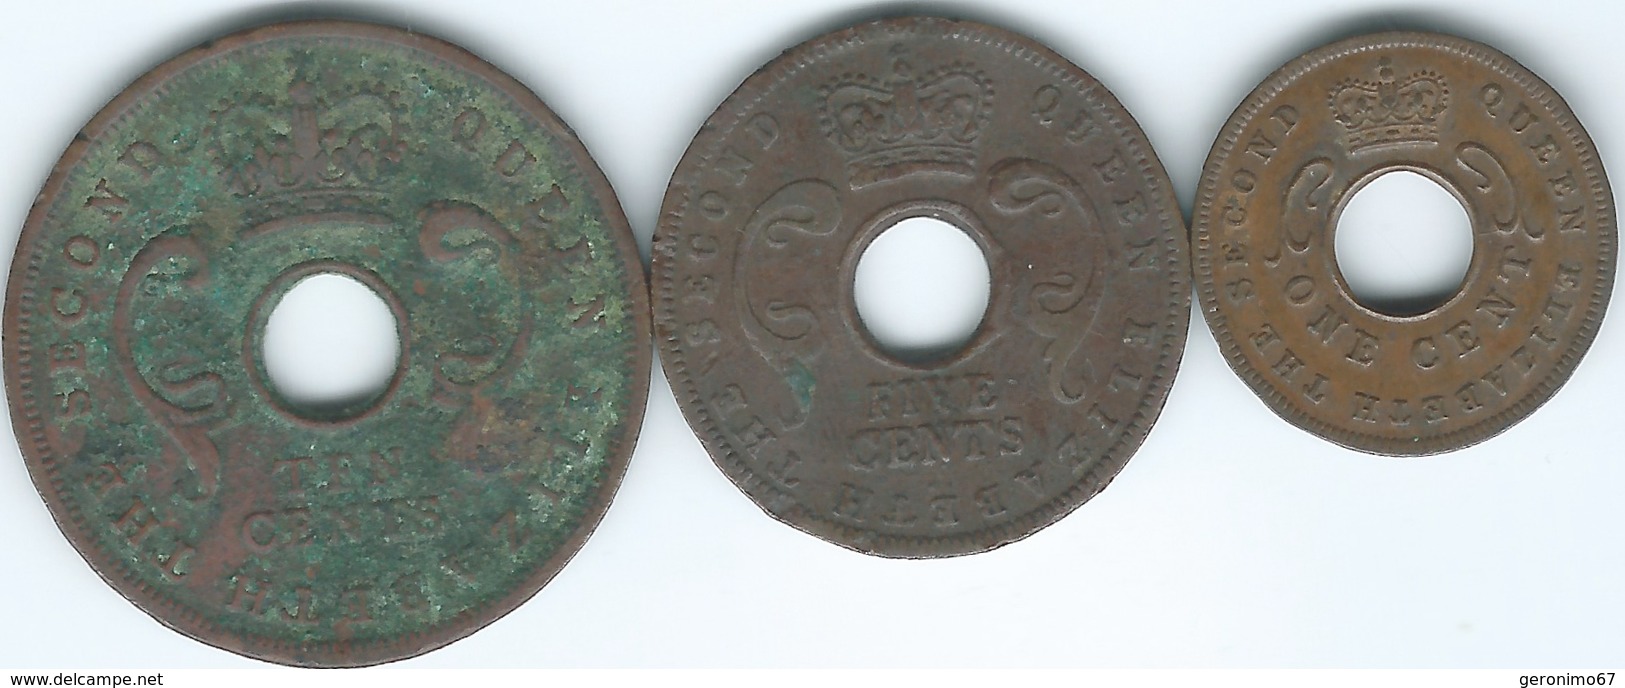 East Africa - Elizabeth II - 1 Cent - 1957 (KM35) 5 Cents - 1955 (KM37) & 10 Cents - 1956 (KM38) - Colonia Britannica